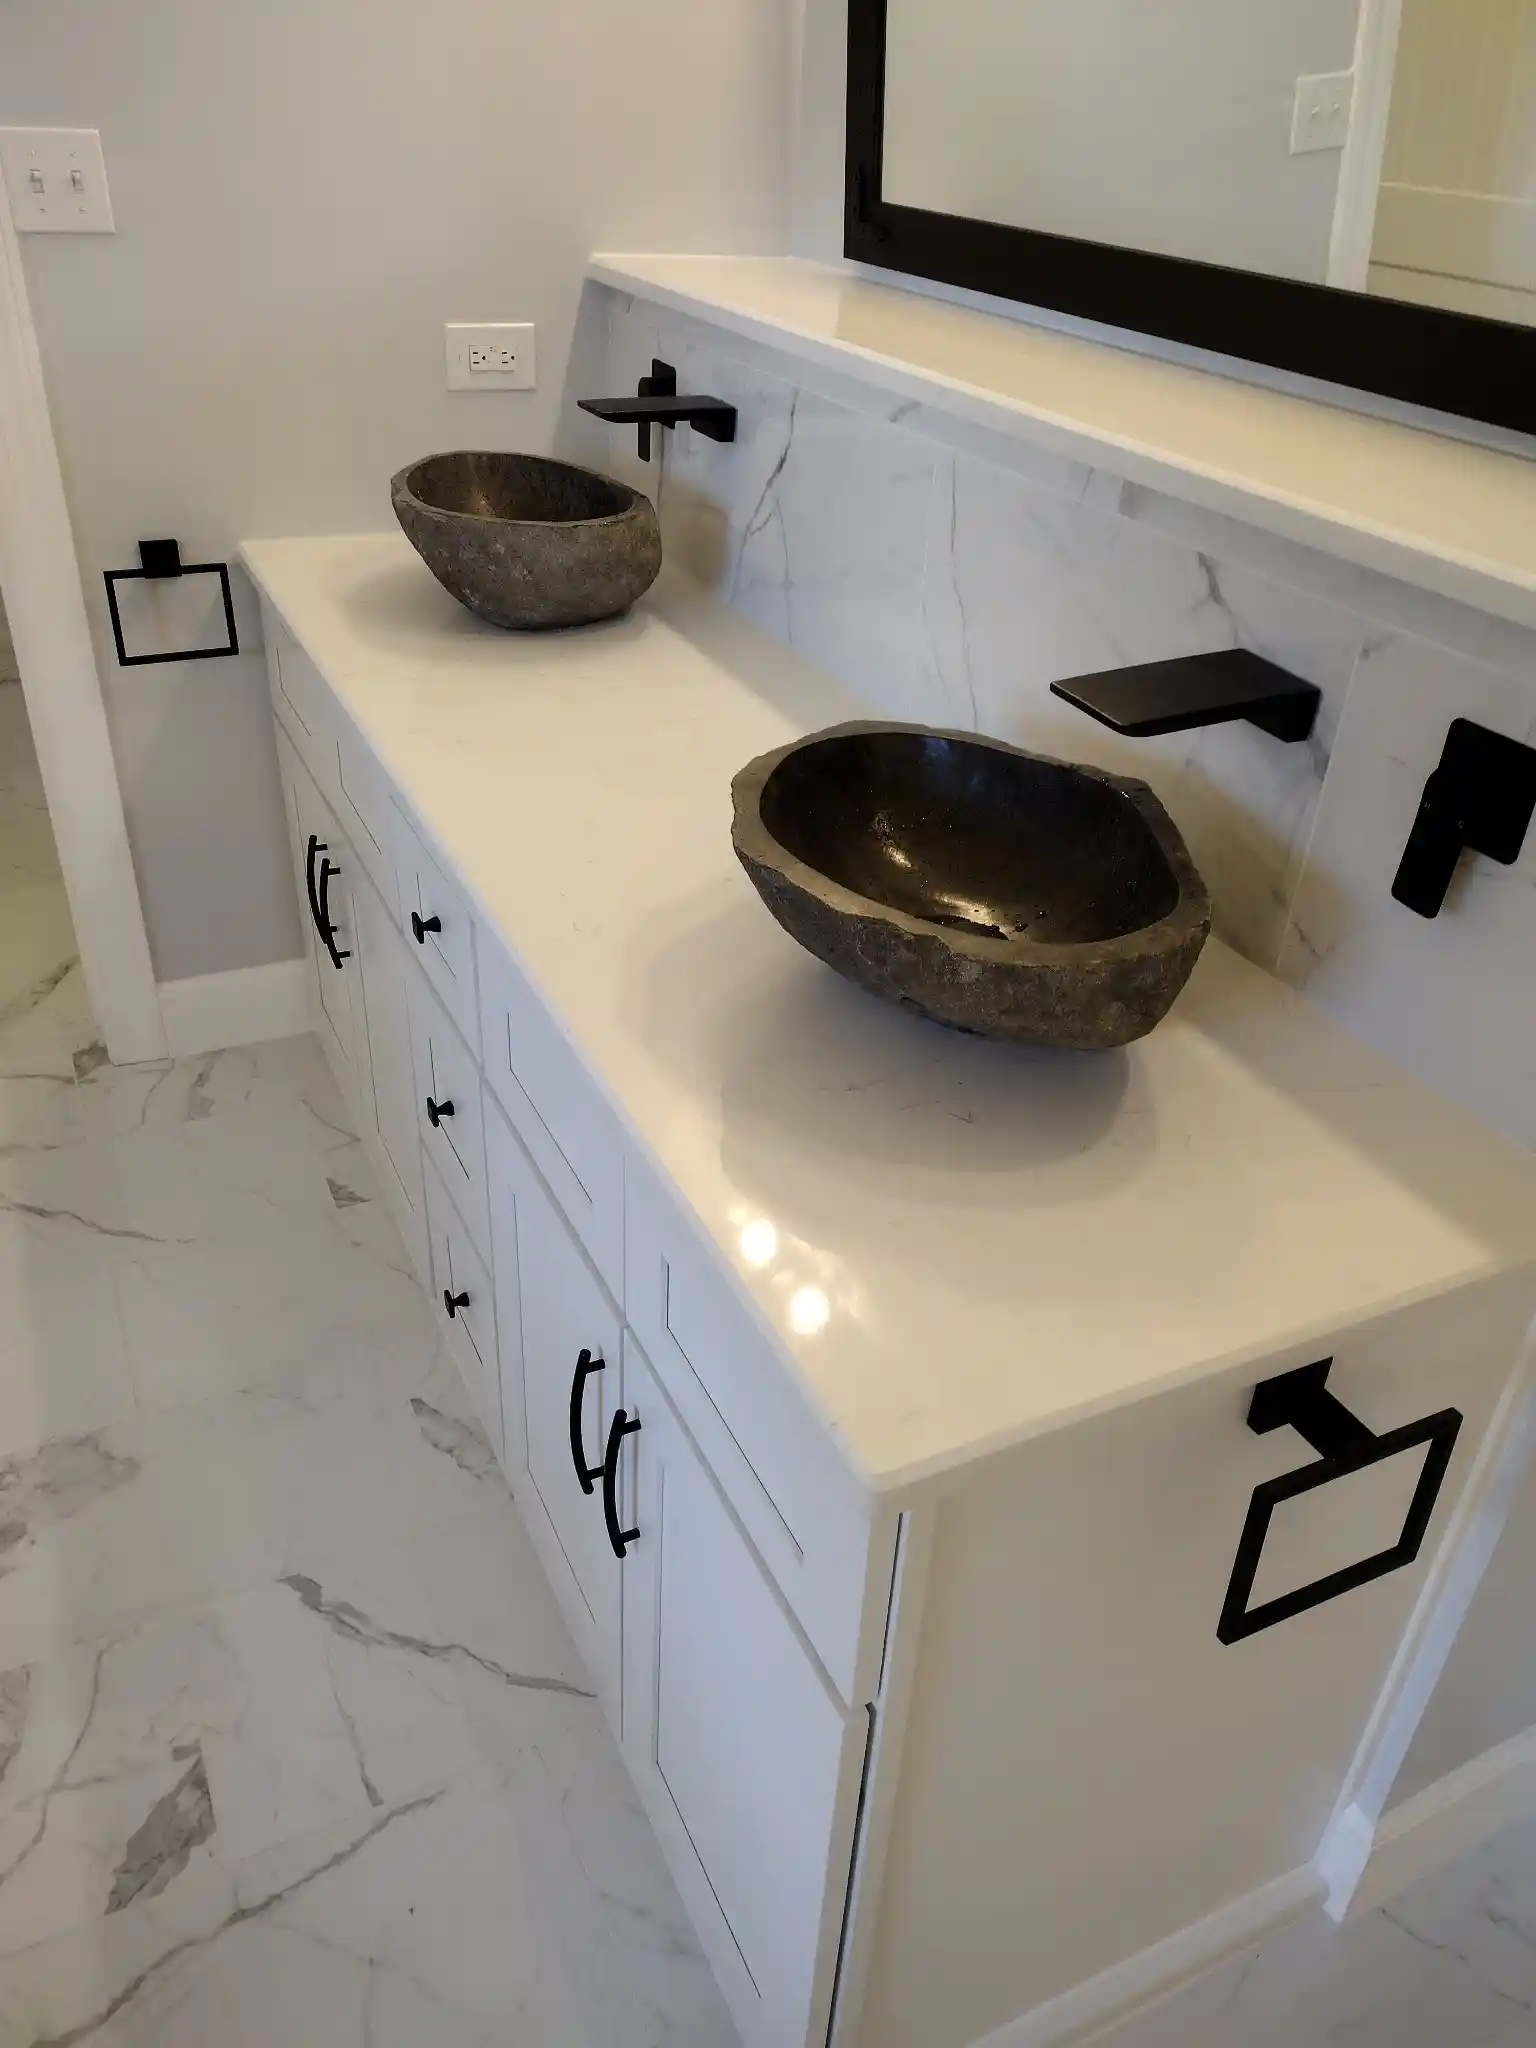 Bathroom renovation project with custom sinks.